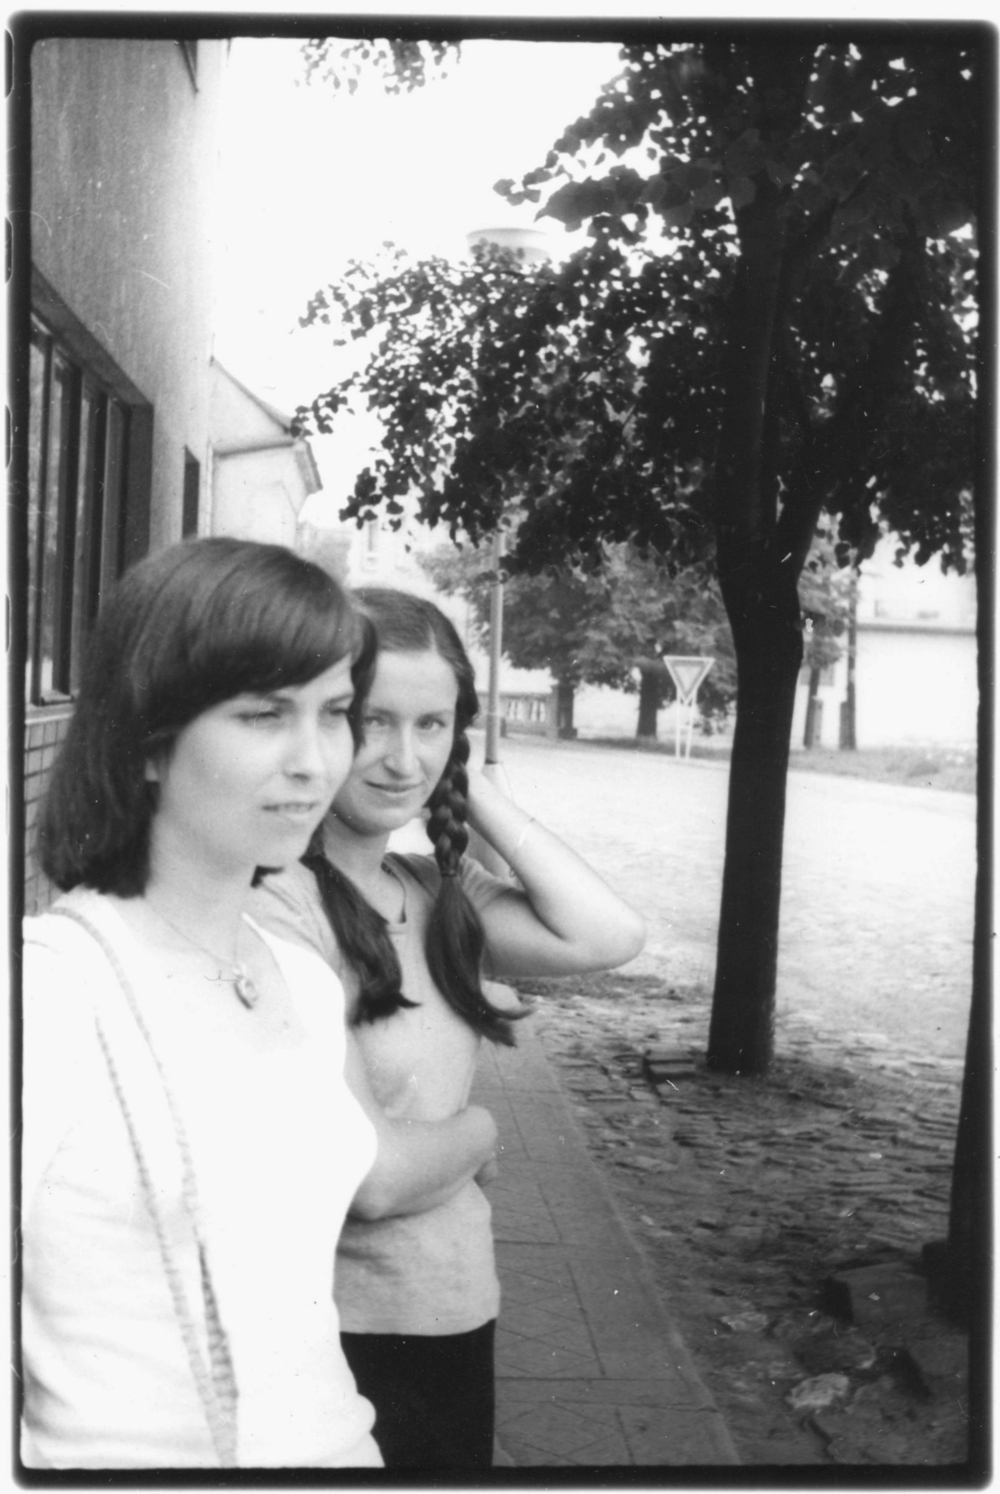 Alenu Rajlichovou s kamarádkou (Liba Jakubcova) vyfotografoval dnes slavný MiroslavTichy, Kyjov, kolem 1979